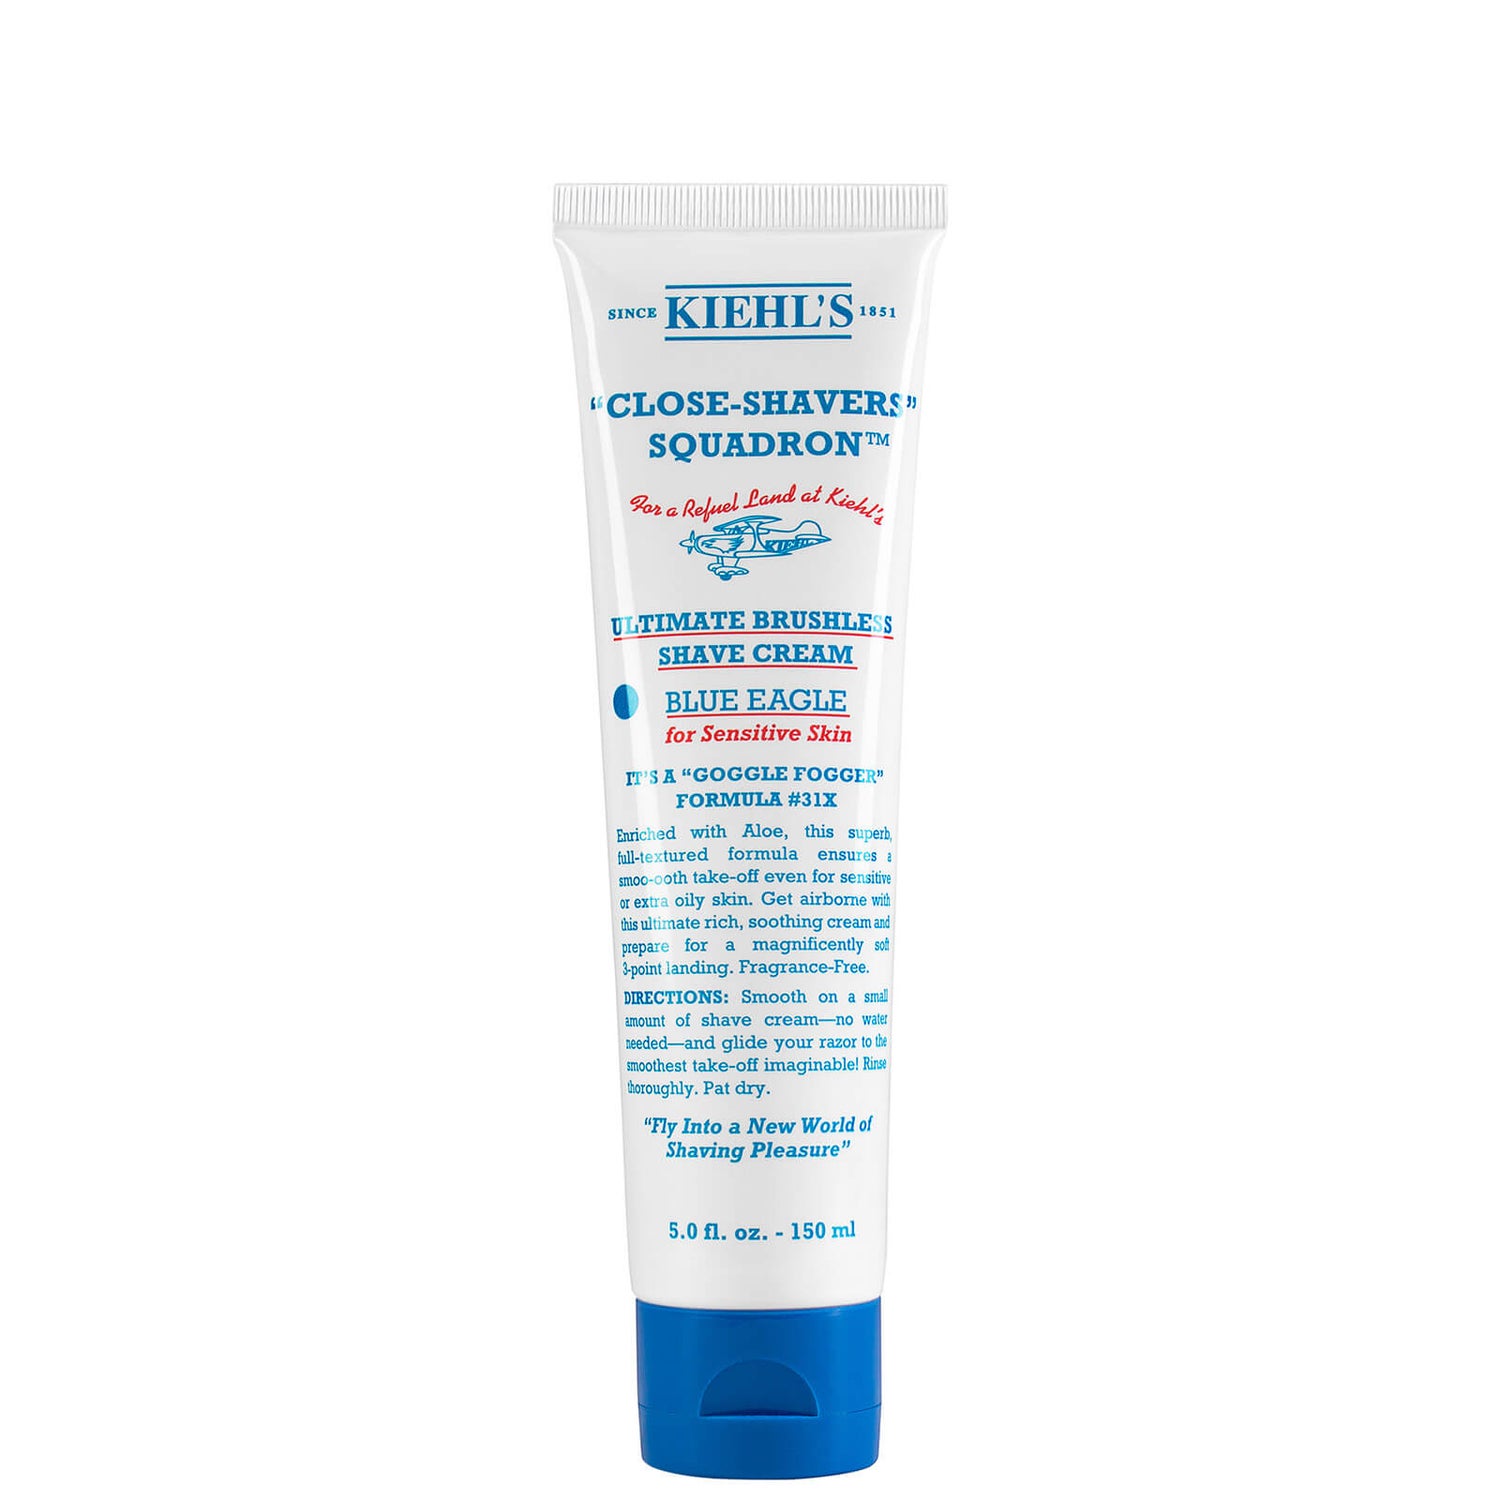 Kiehl's Ultimate Brushless Blue Eagle Shave Cream Tube 150ml